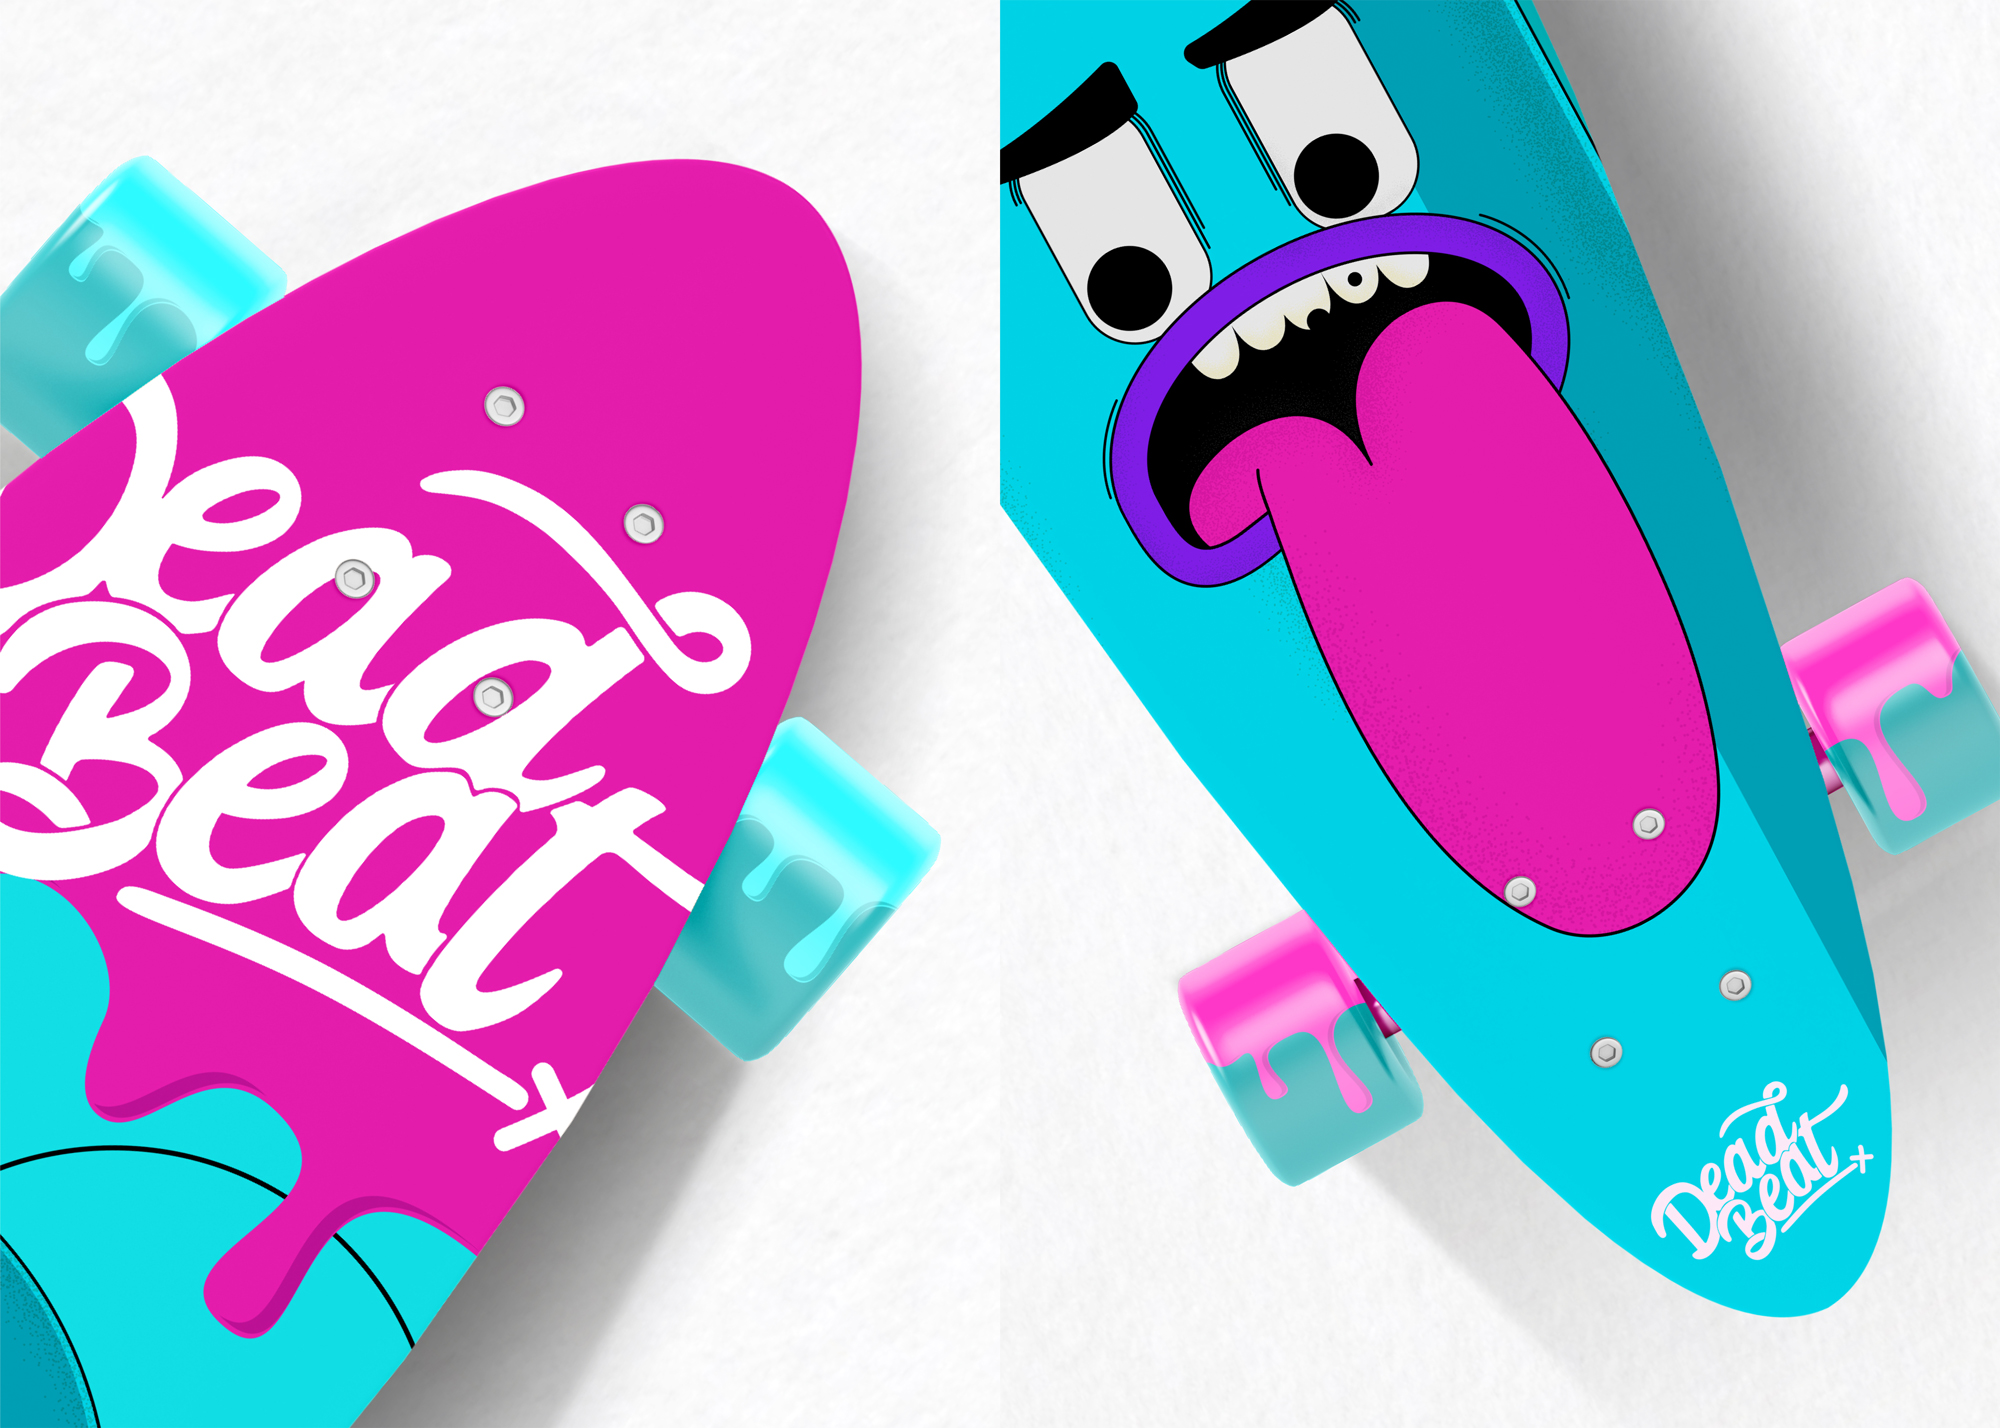 Deadbeat skate culture / Branding / Design / Art Direction